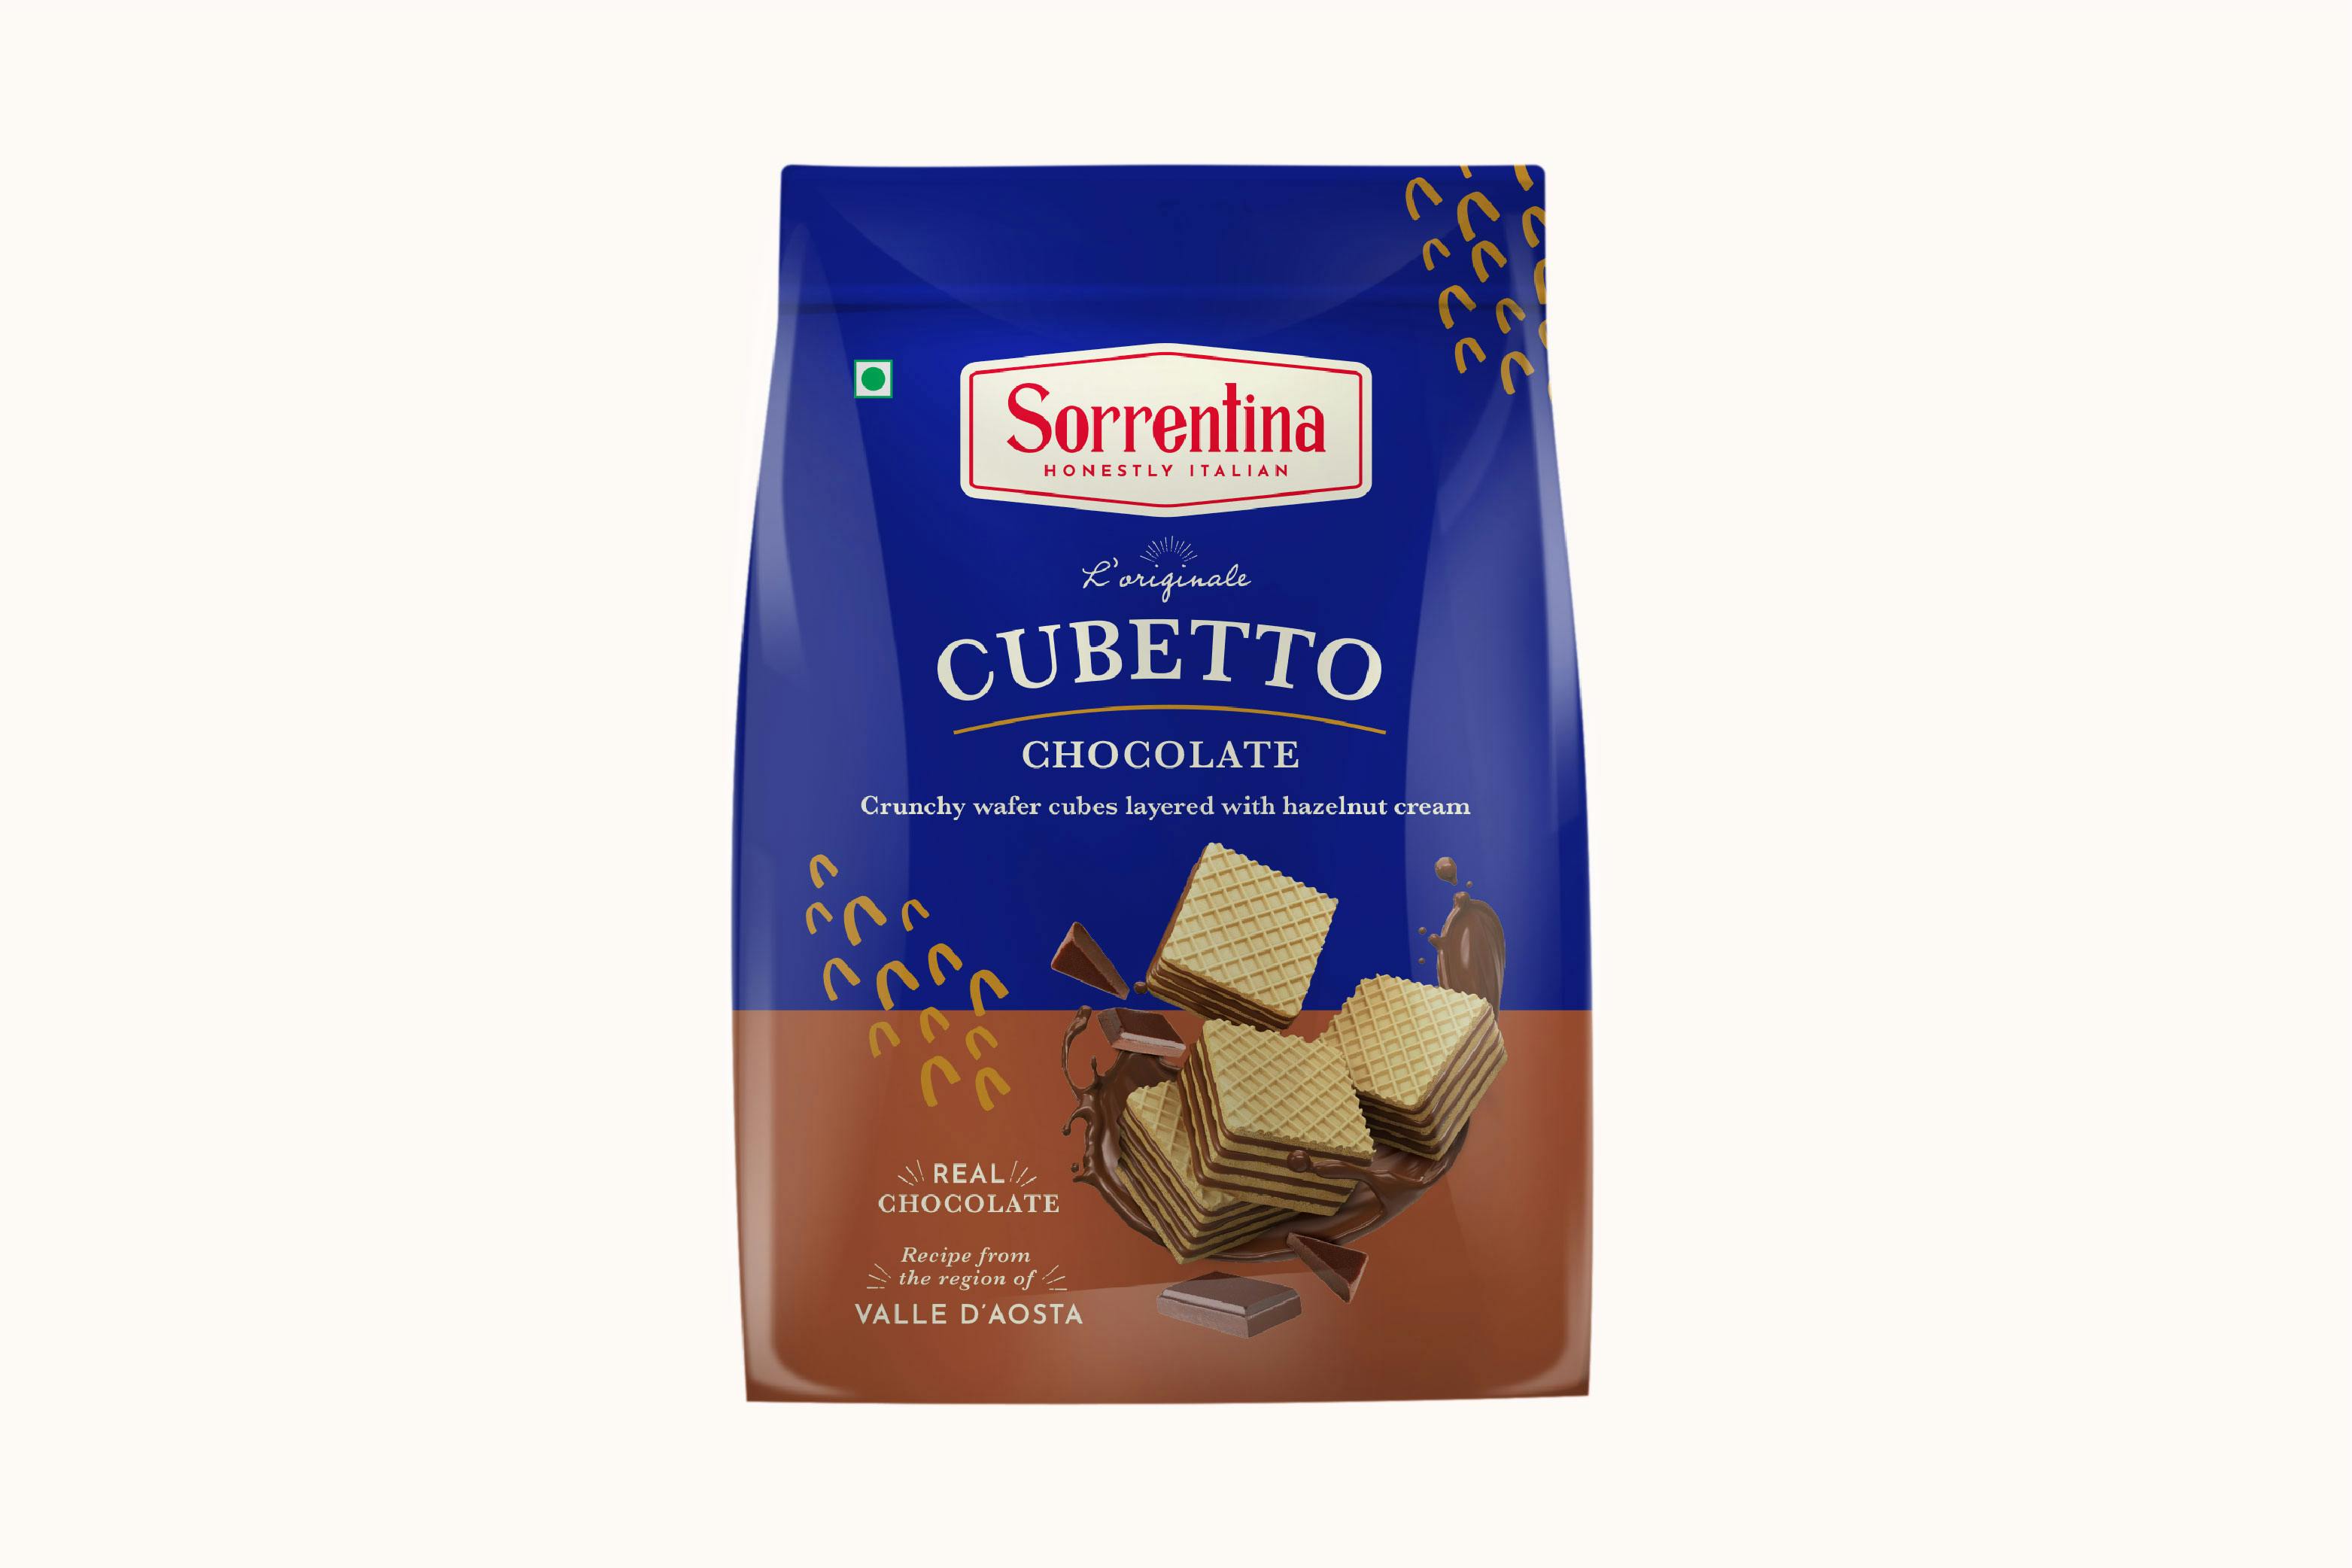 Sorrentina Cubetto Chocolate